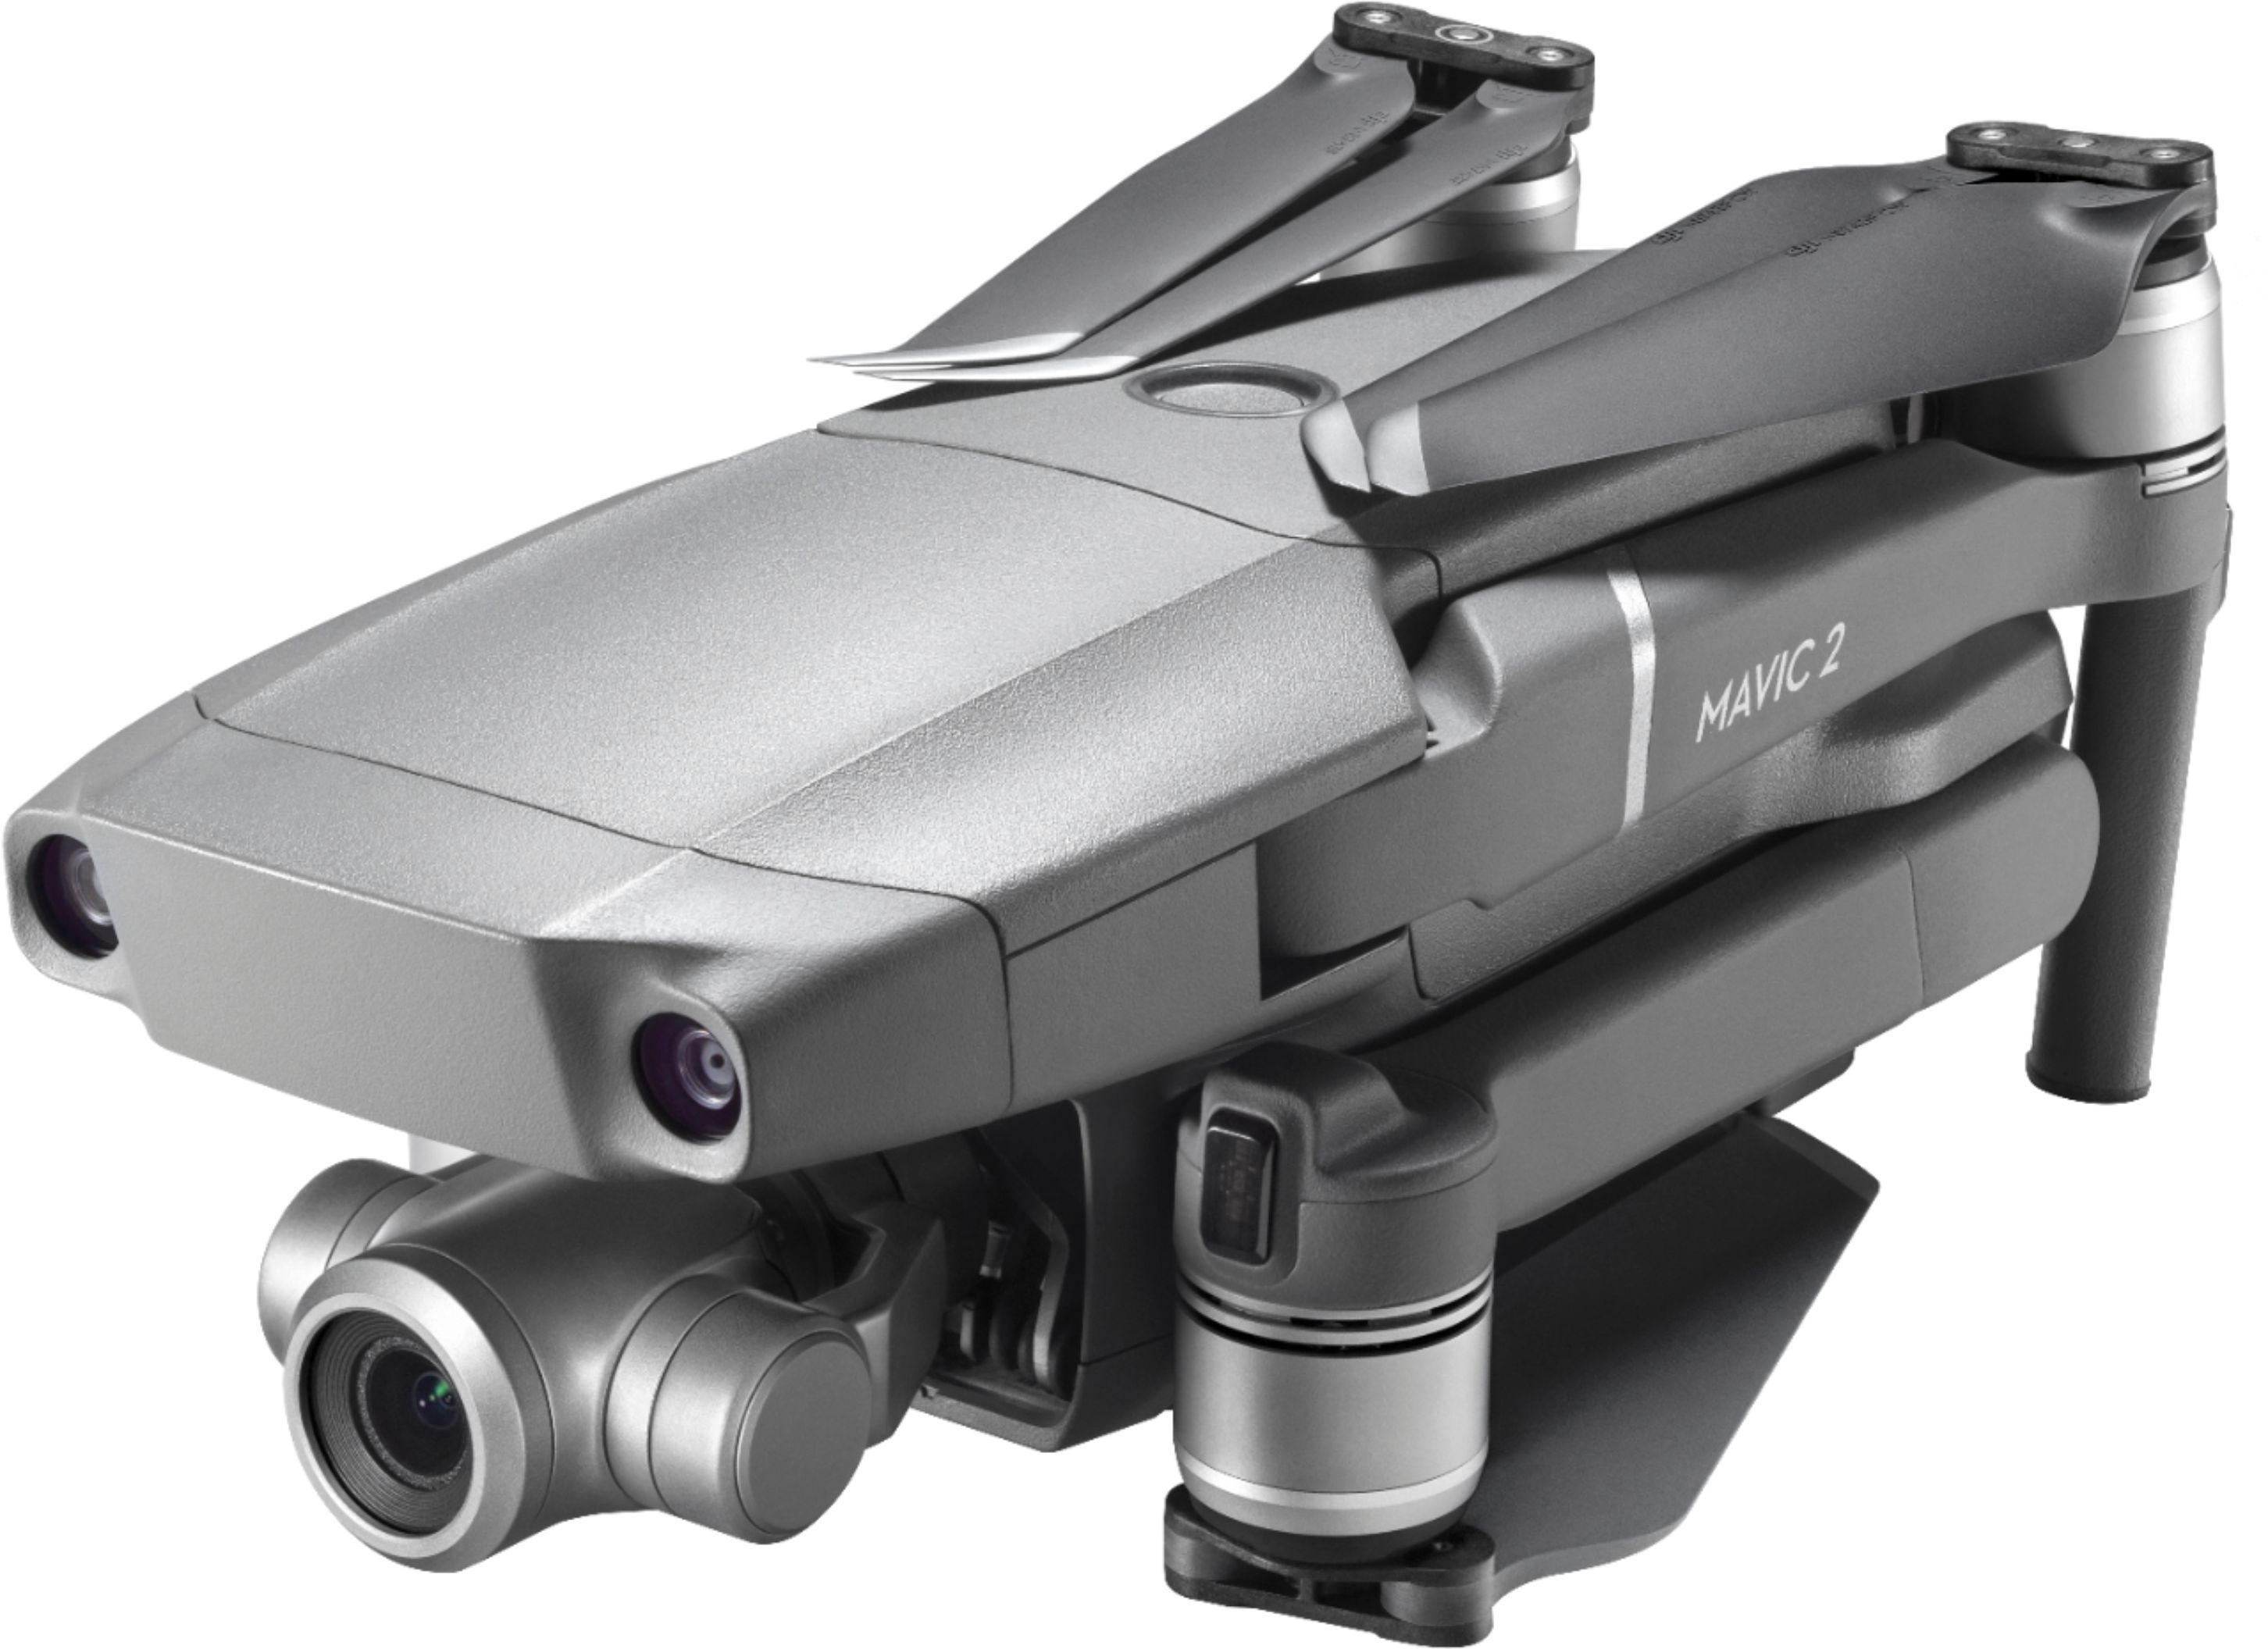 DJI Mavic 2 Zoom - Drone Quadcopter UAV with Optical Zoom Camera 3-Axis  Gimbal 4K Video 12MP 1/2.3 CMOS Sensor, up to 48mph, Gray